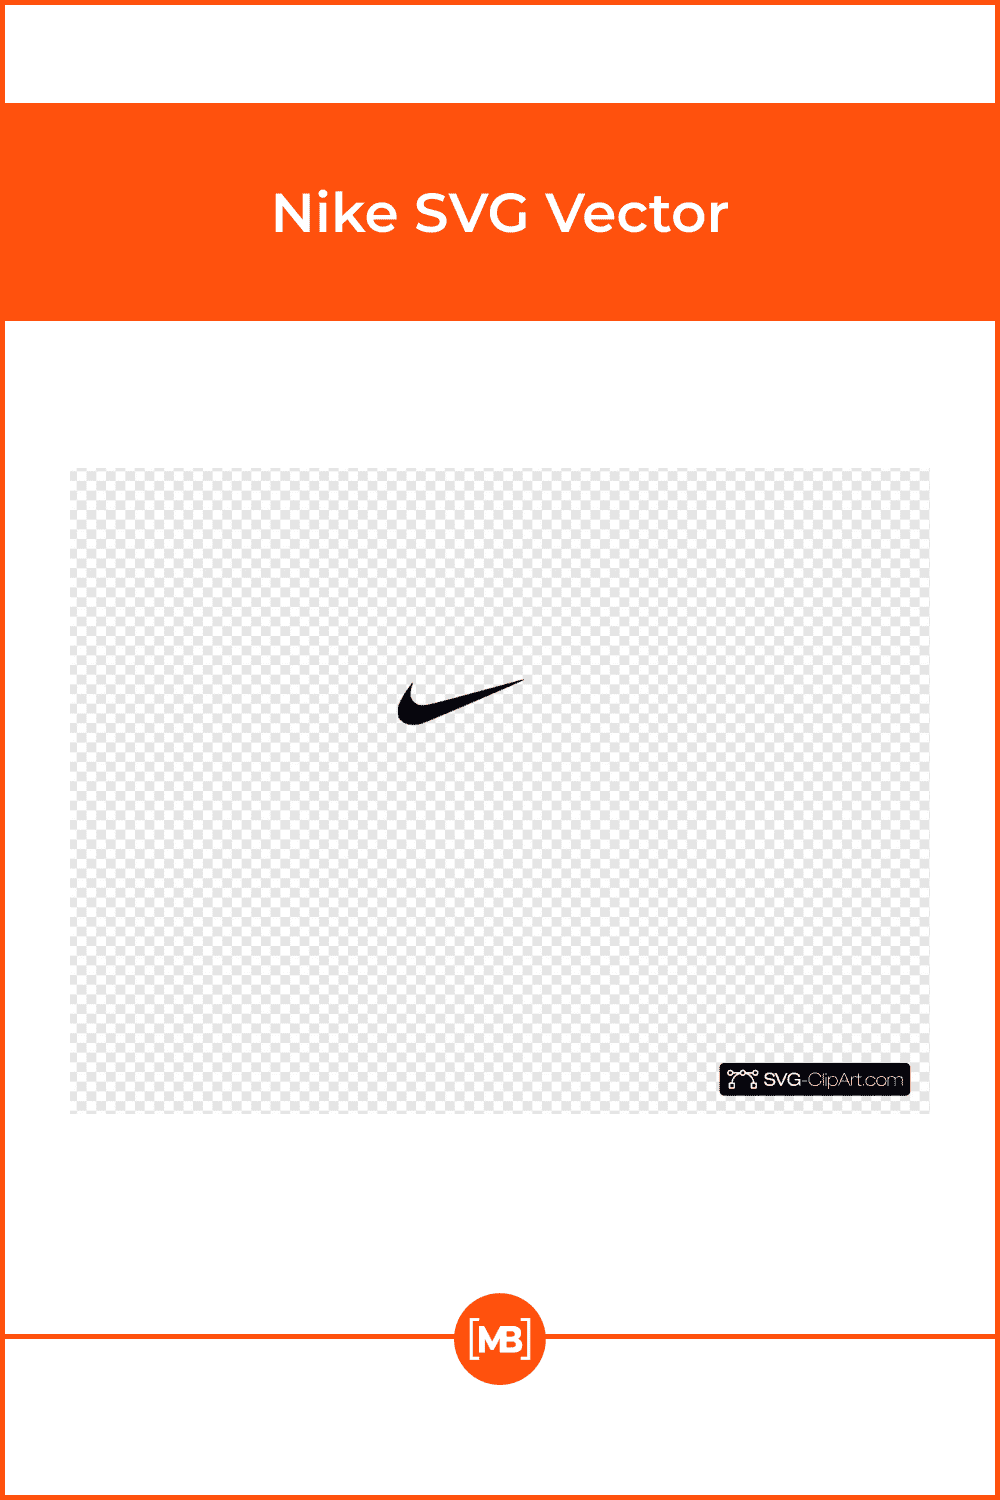 Nike SVG Vector.